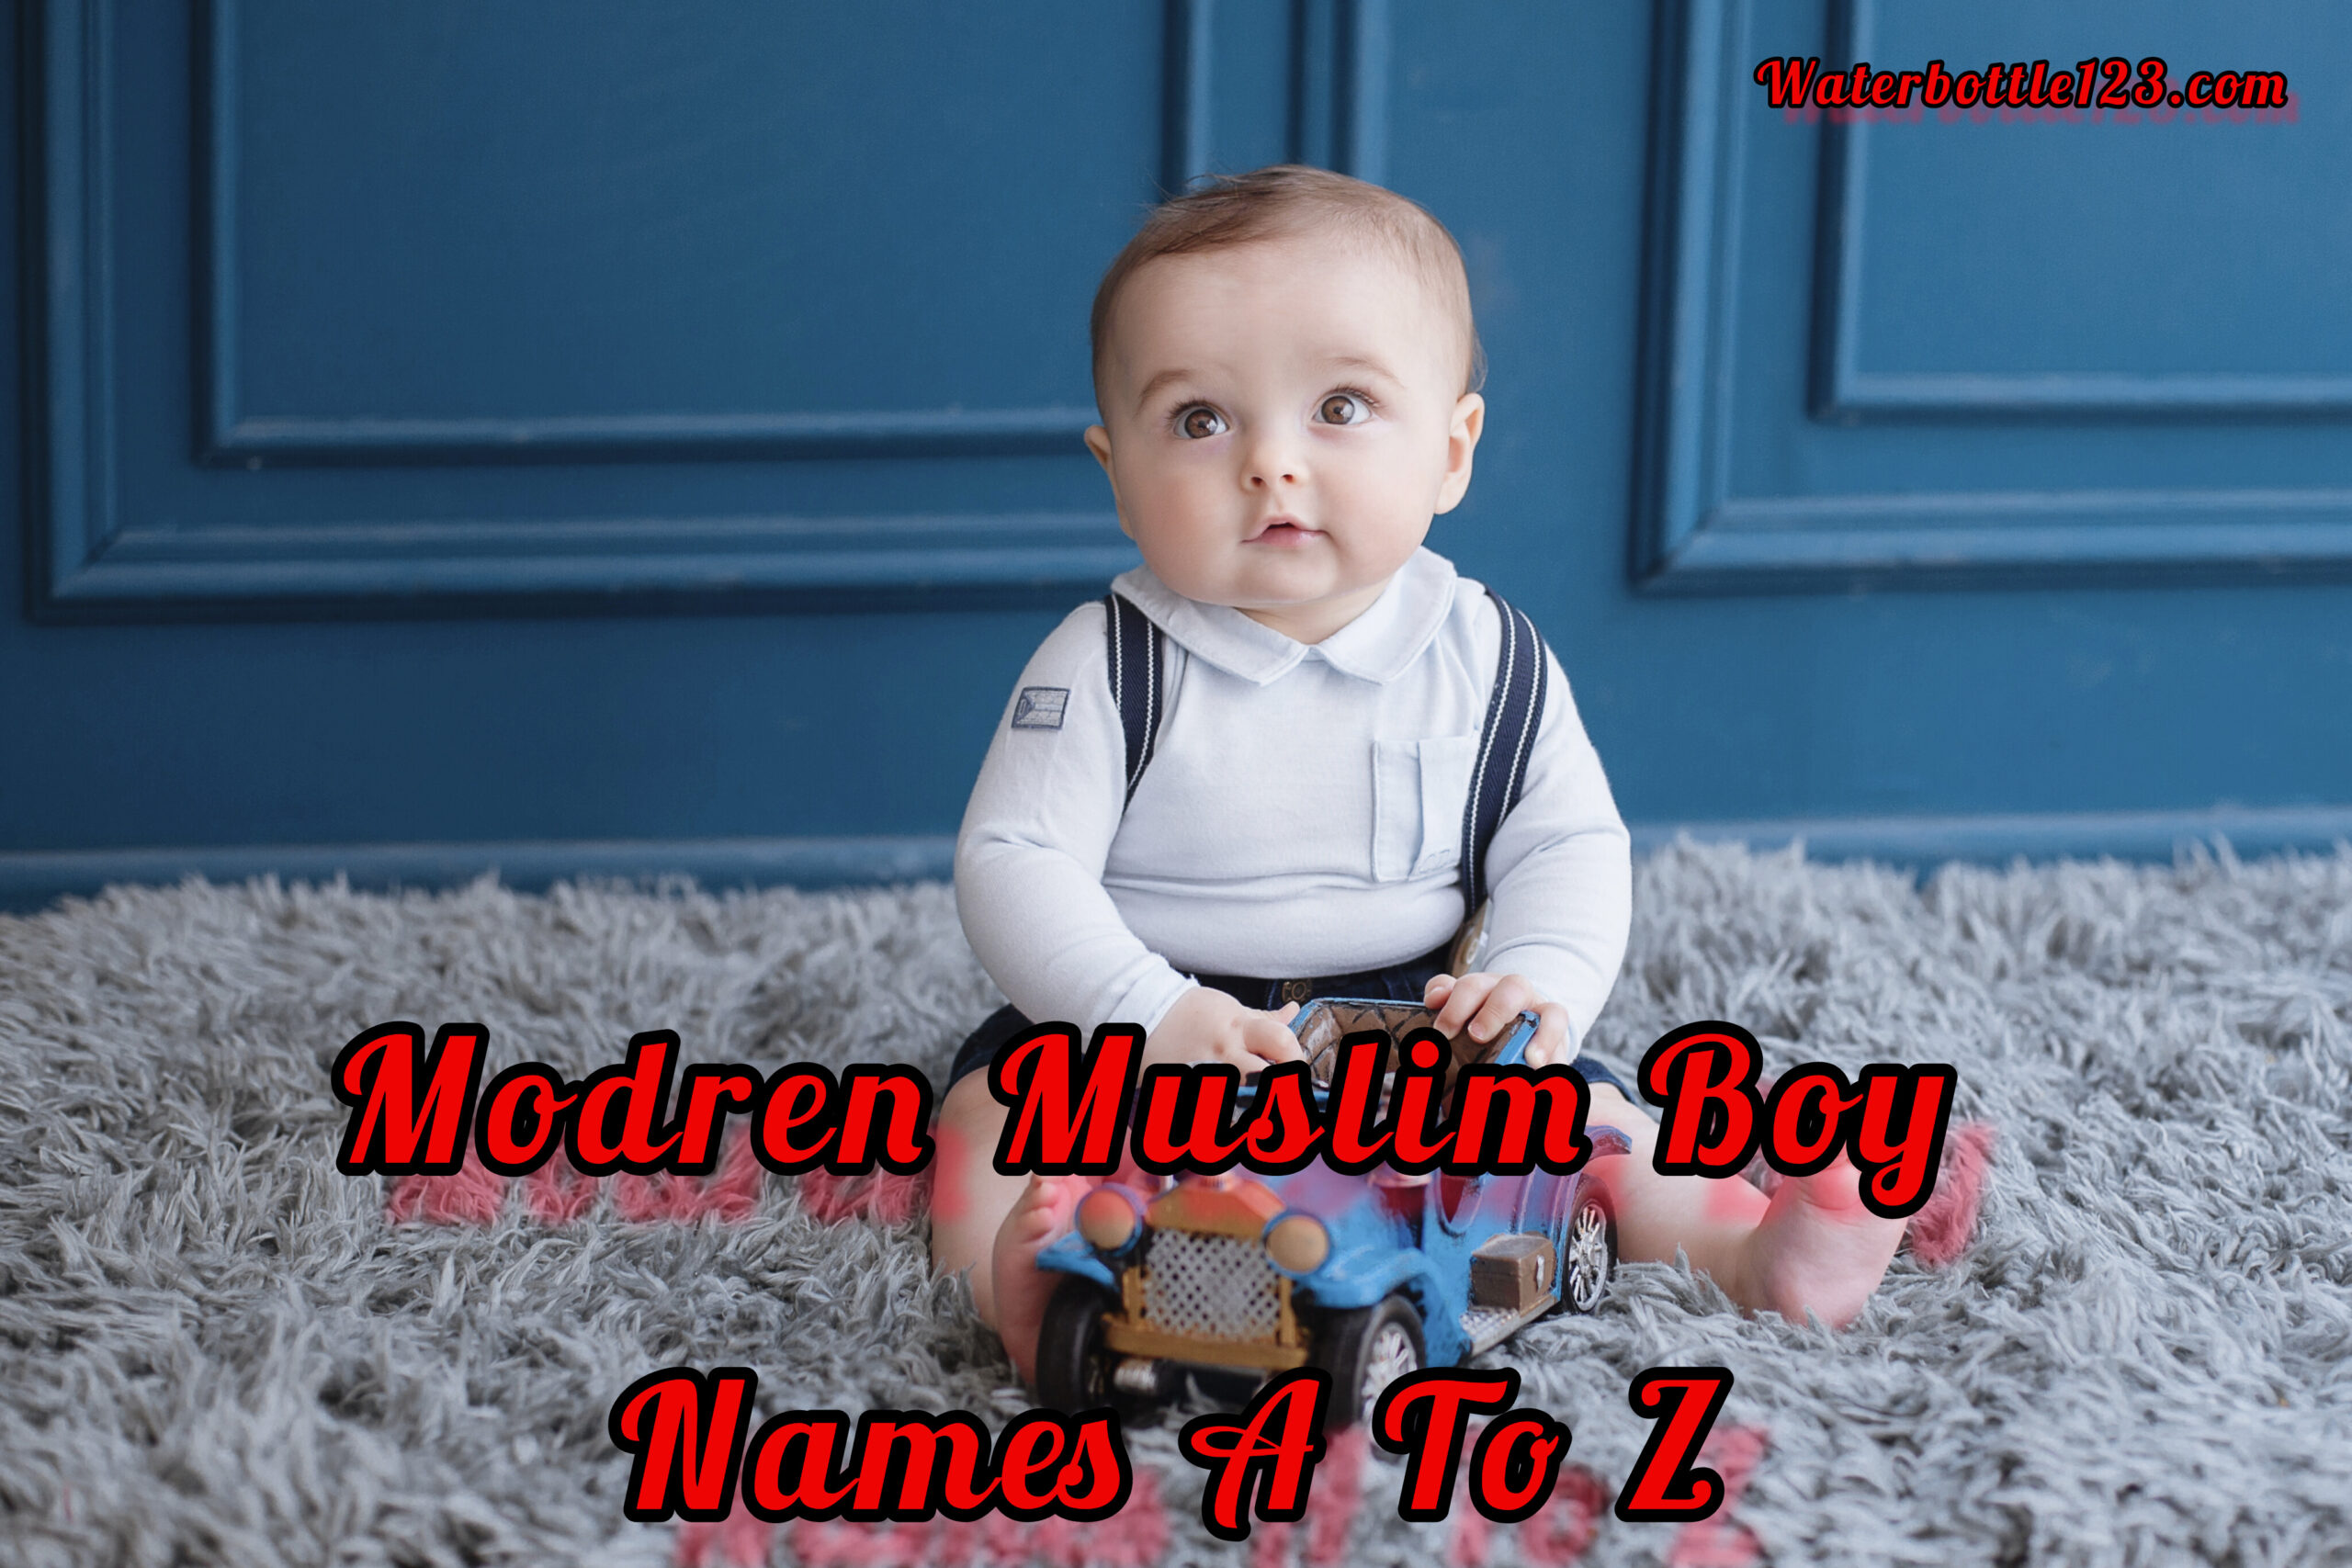 Modern muslim boy names a to z